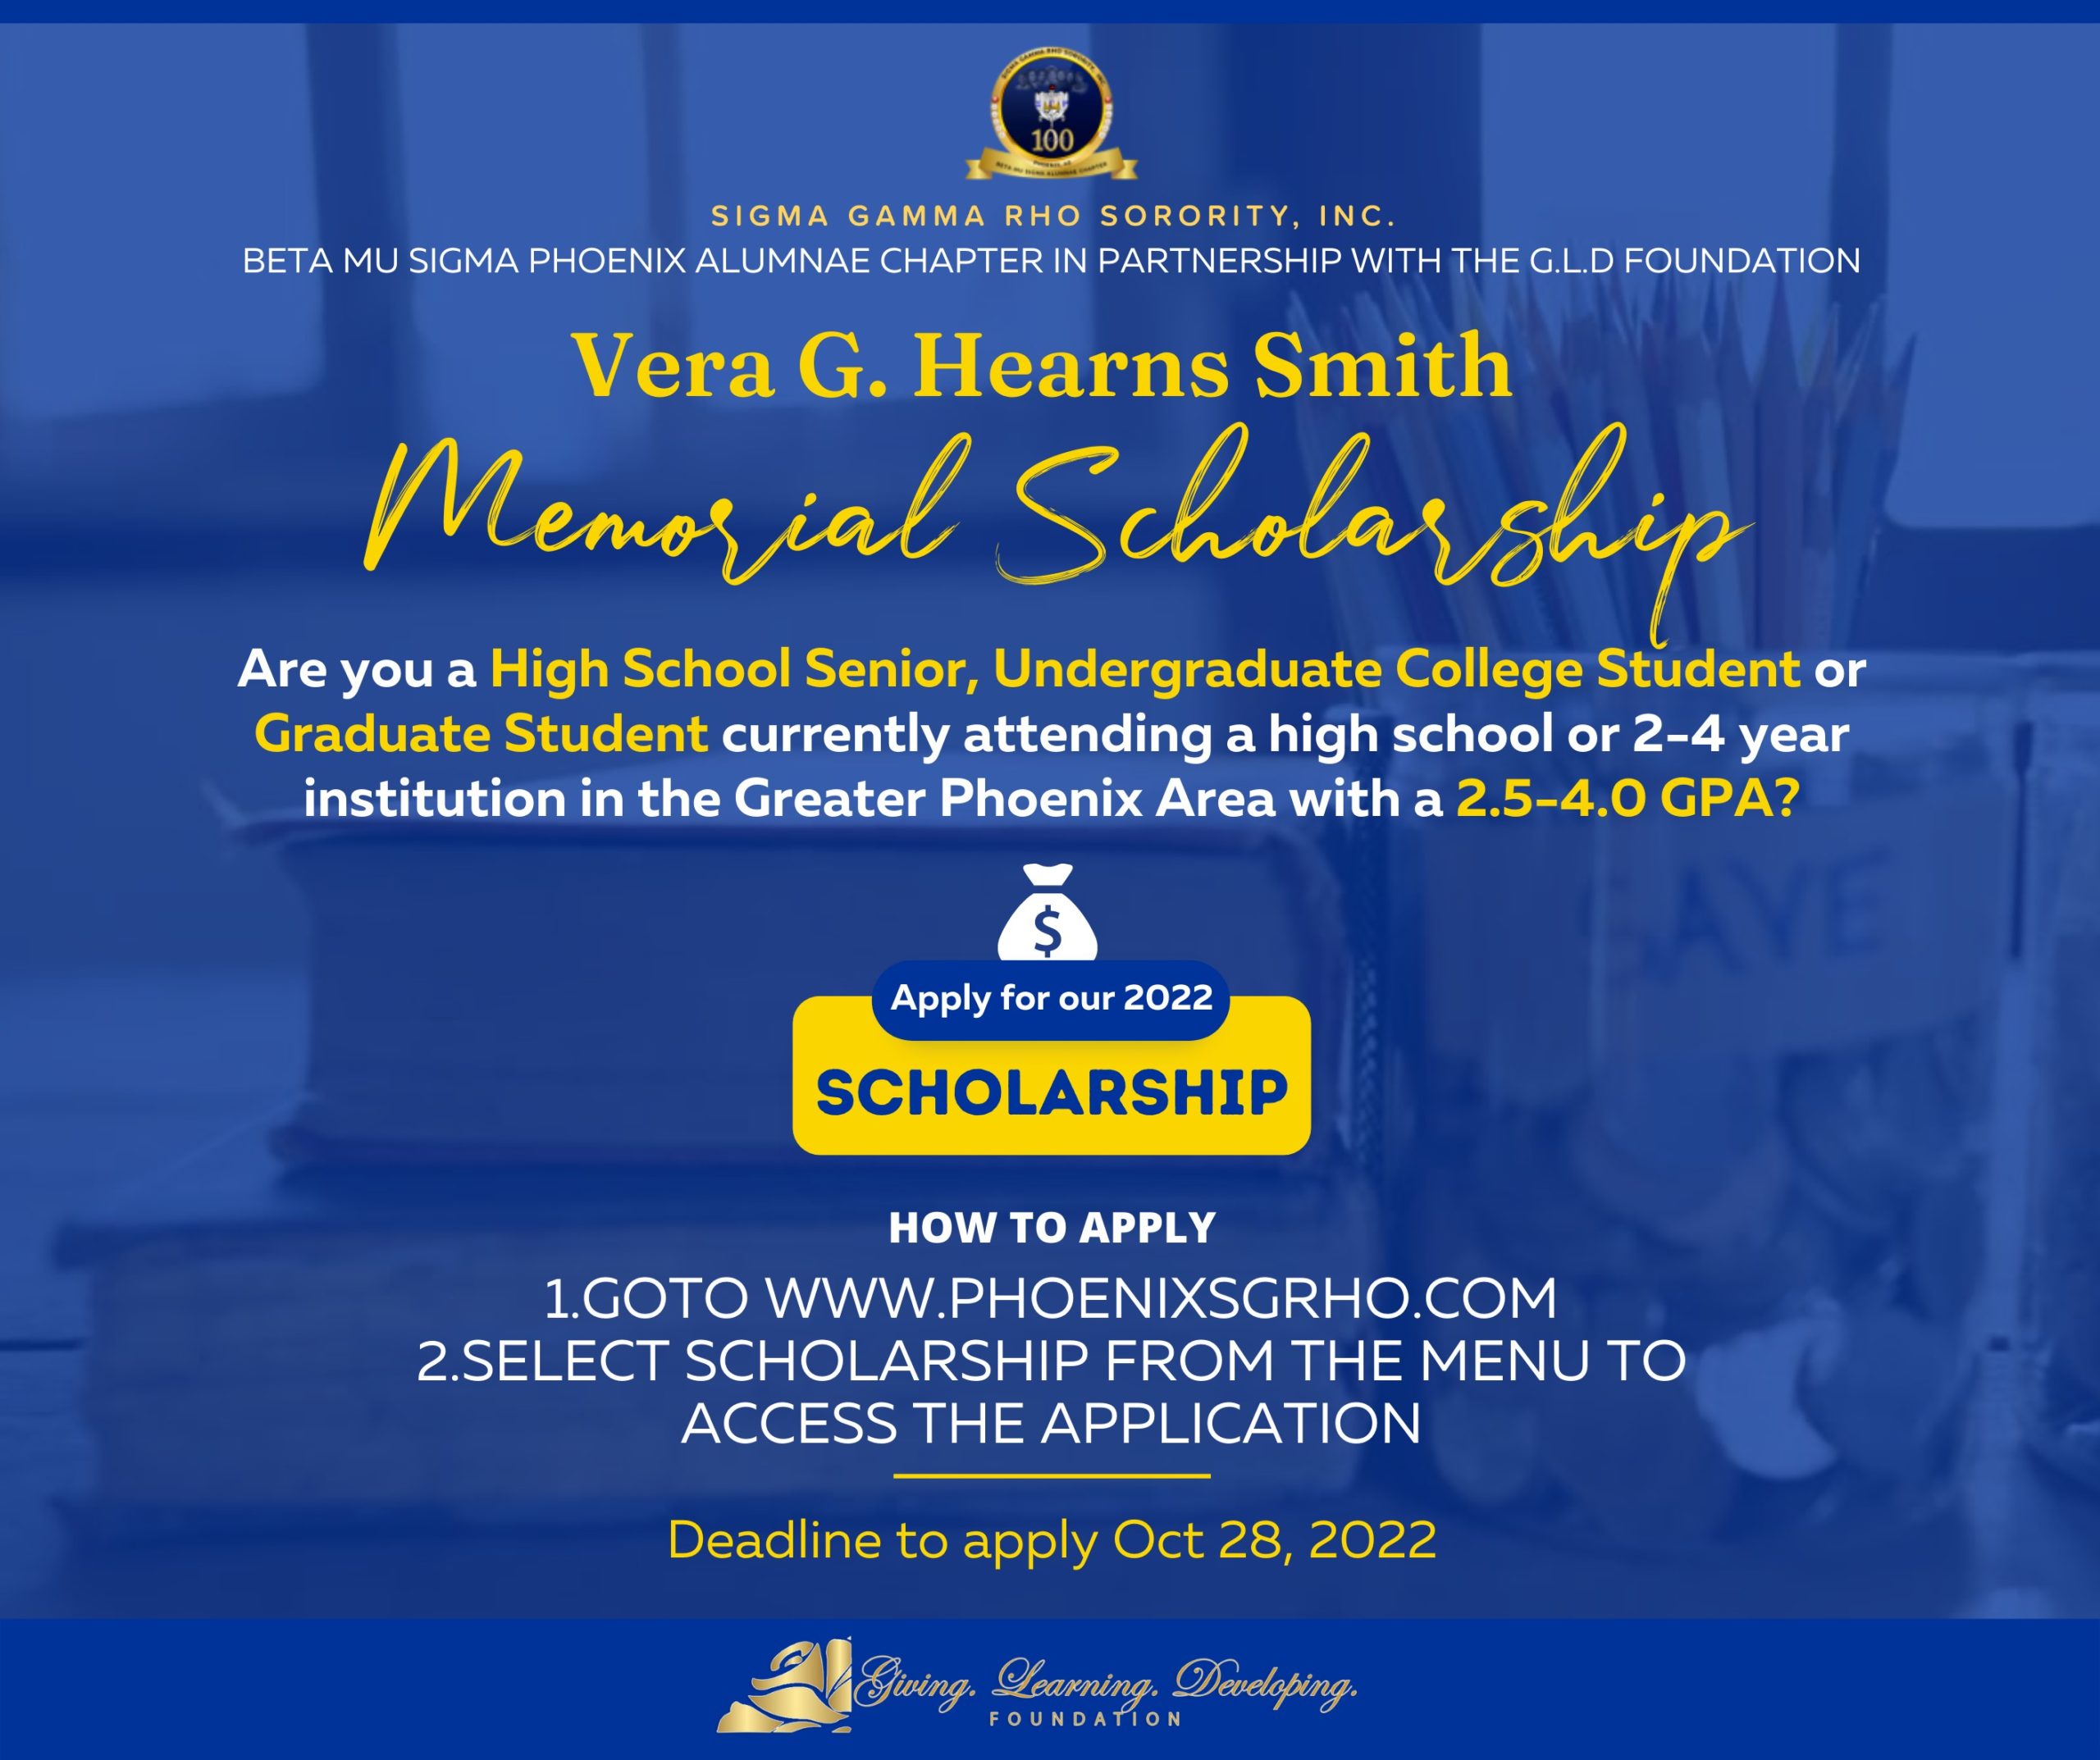 Sigma Gamma Rho Sorority Offering Scholarship Opportunity to Graduating High School Seniors in Phoenix Area